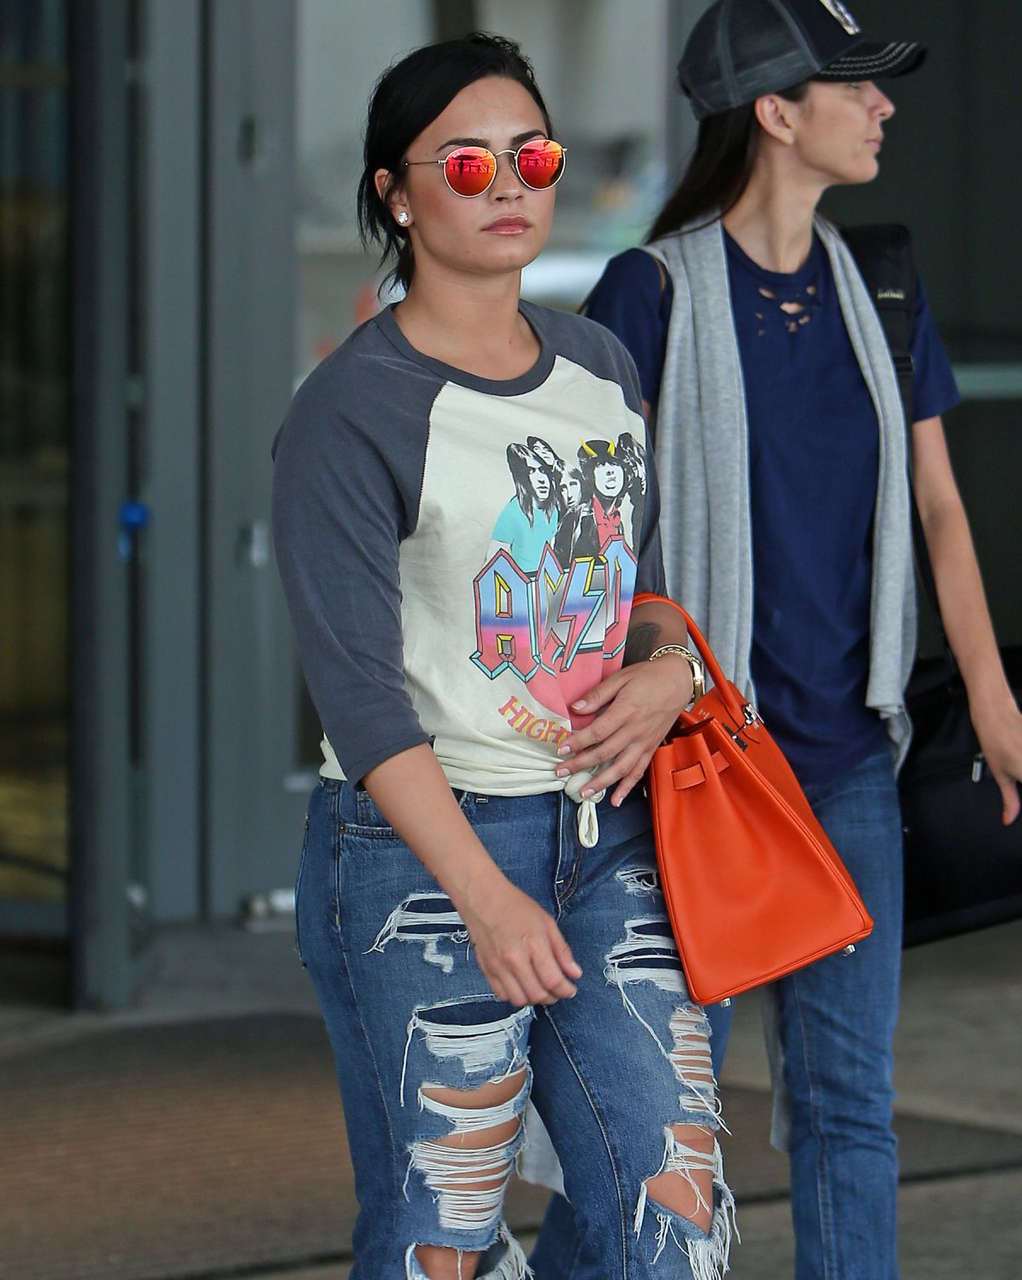 Demi Lovato Ripped Jeans Jfk Airport New York